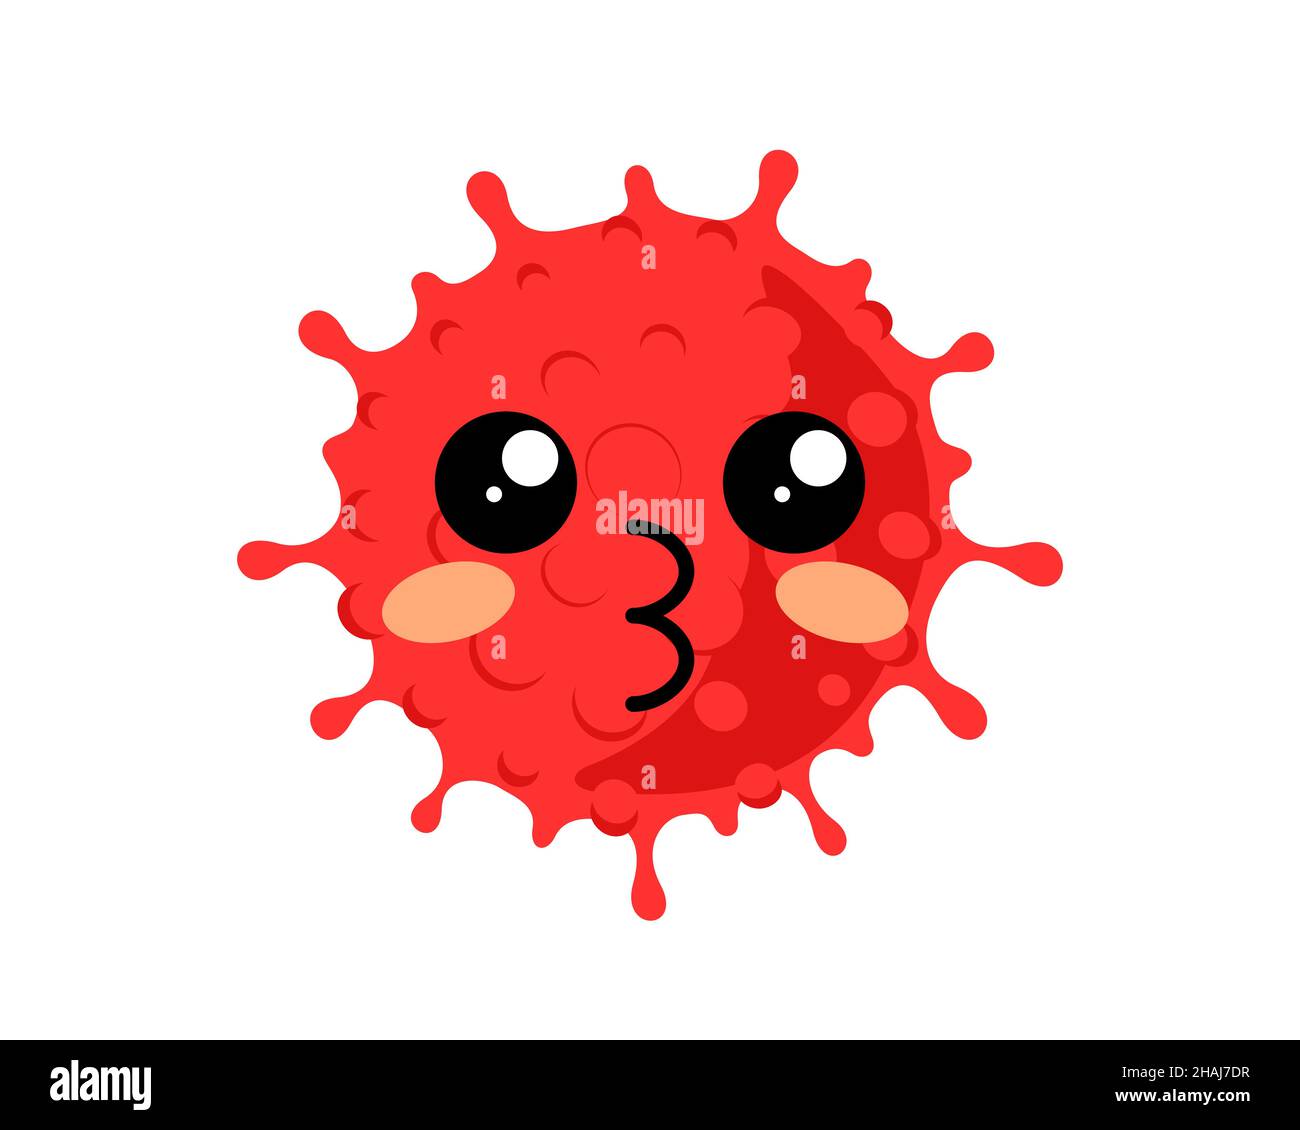 Coronavirus emoji kawaii face. Funny cute corona virus character icon. Kissing covid infection mascot shows tongue. Vector isolated eps illustration Stock Vector